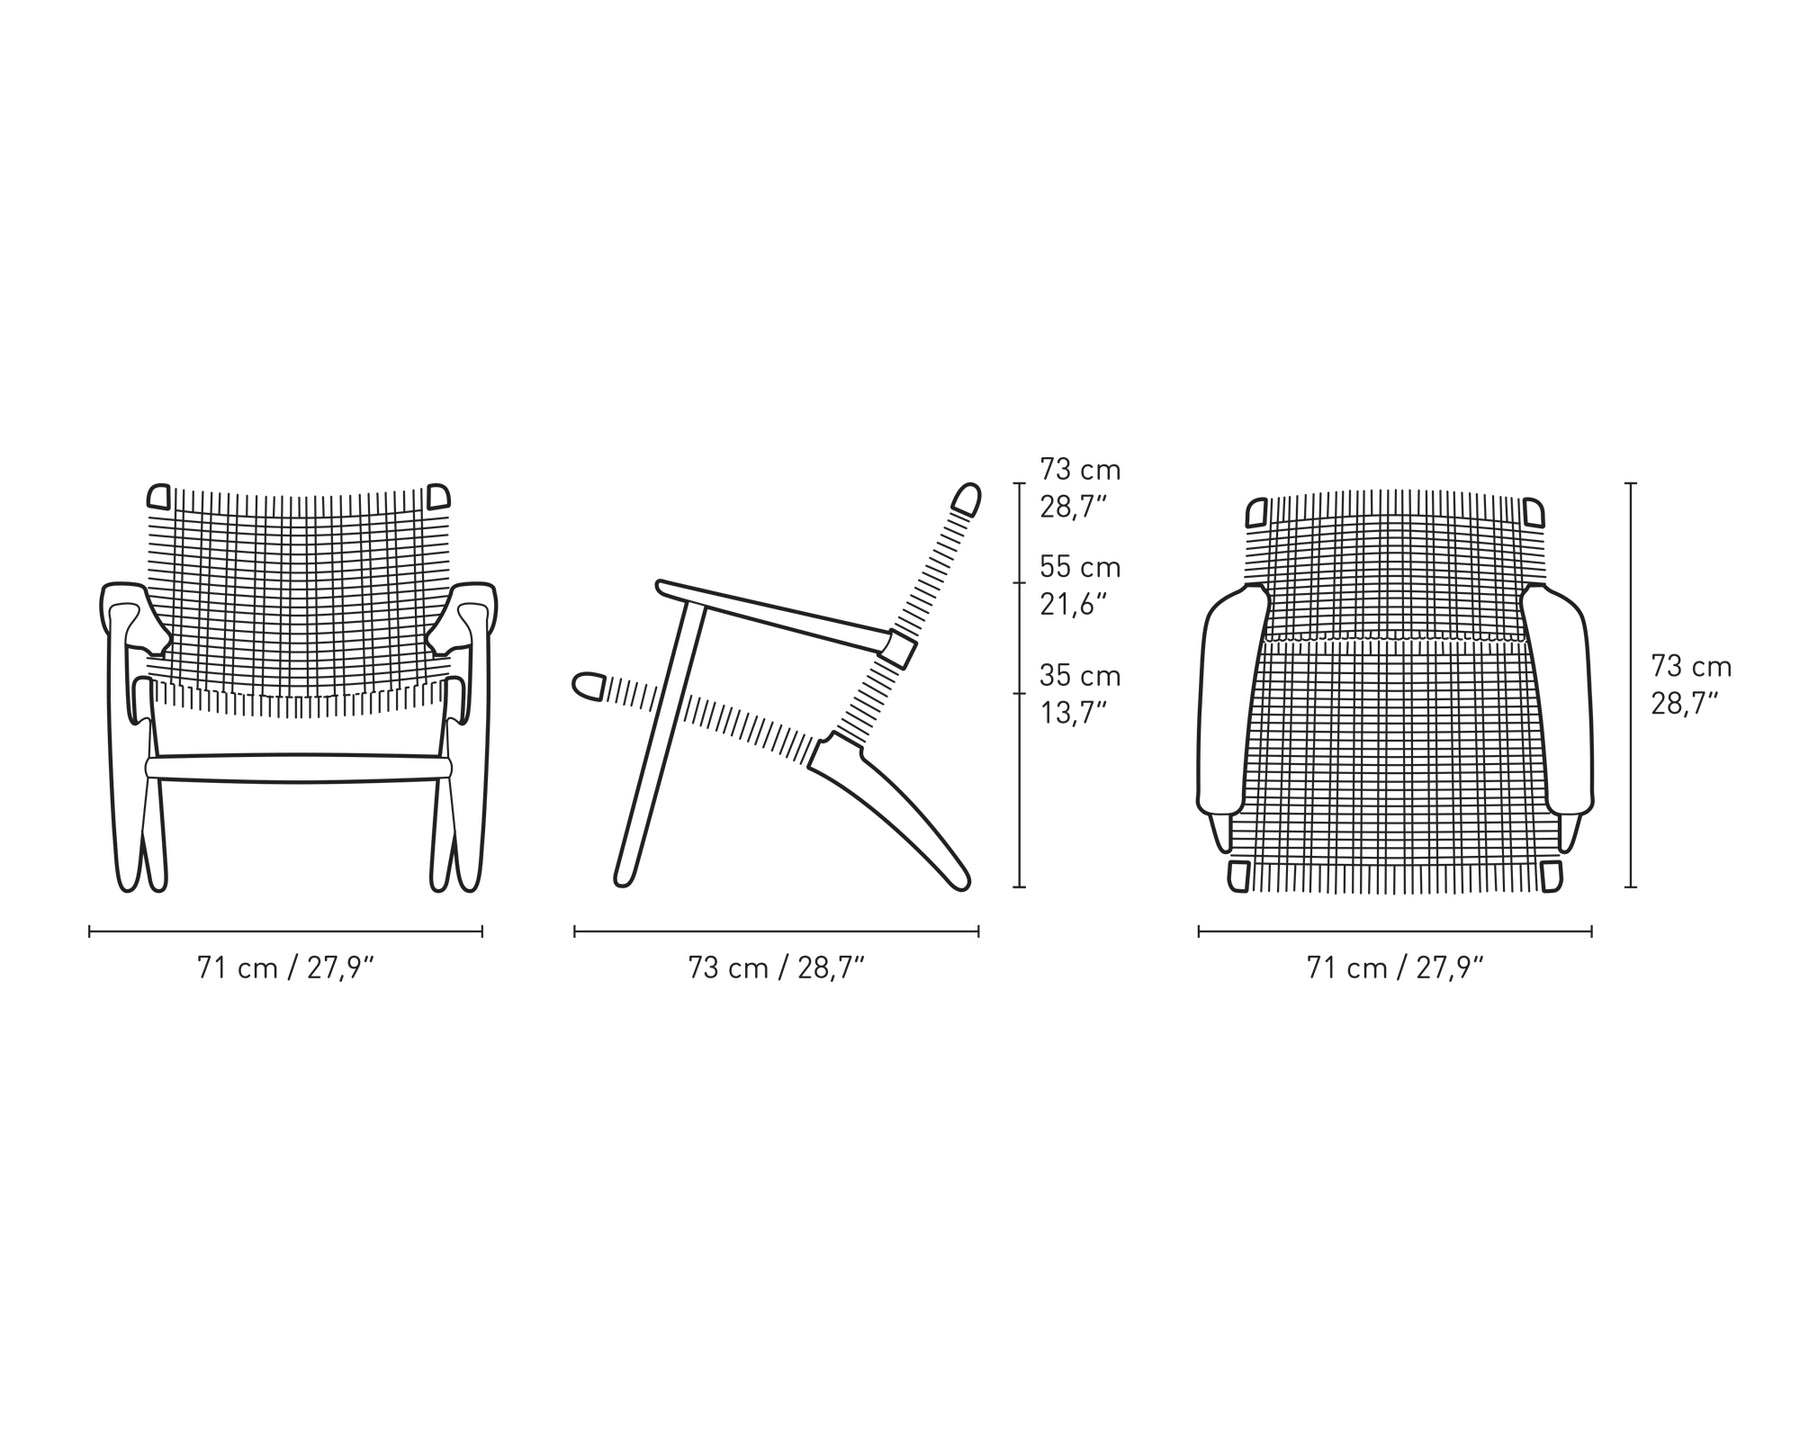 Wood Chair Design | DSHOP